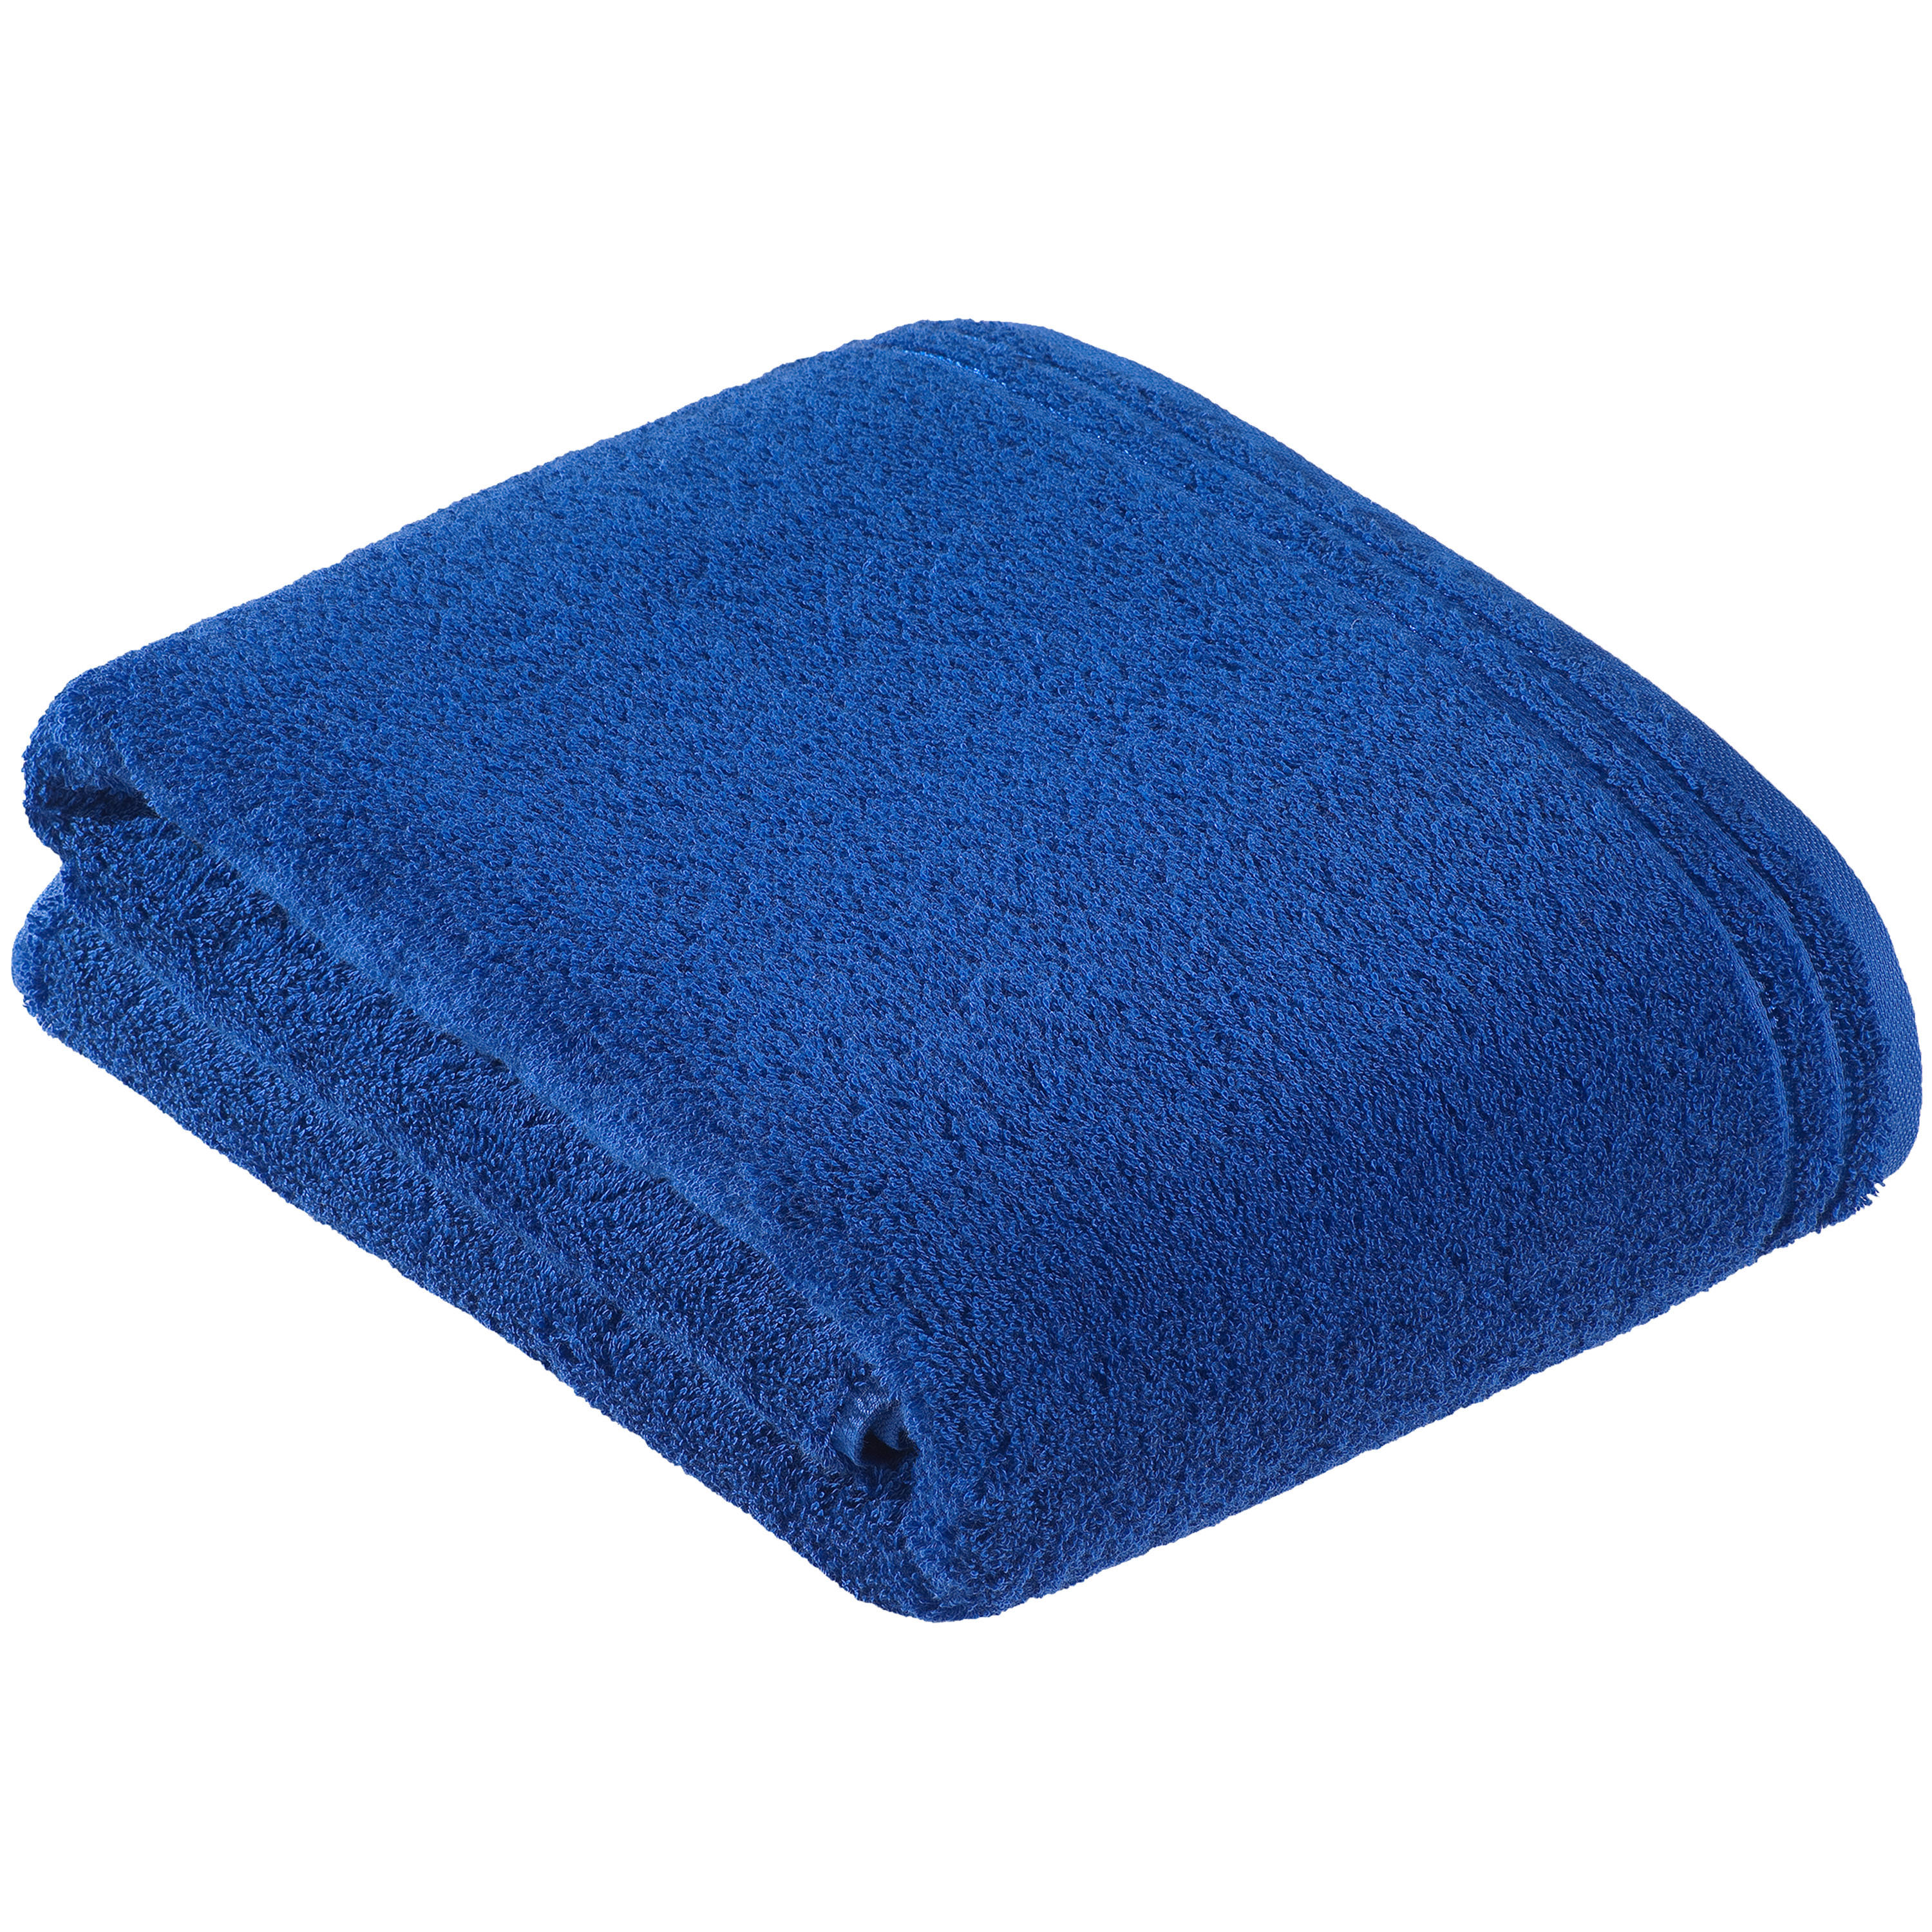 Textilien Preisvergleich in Blau | Moebel Sauna 24